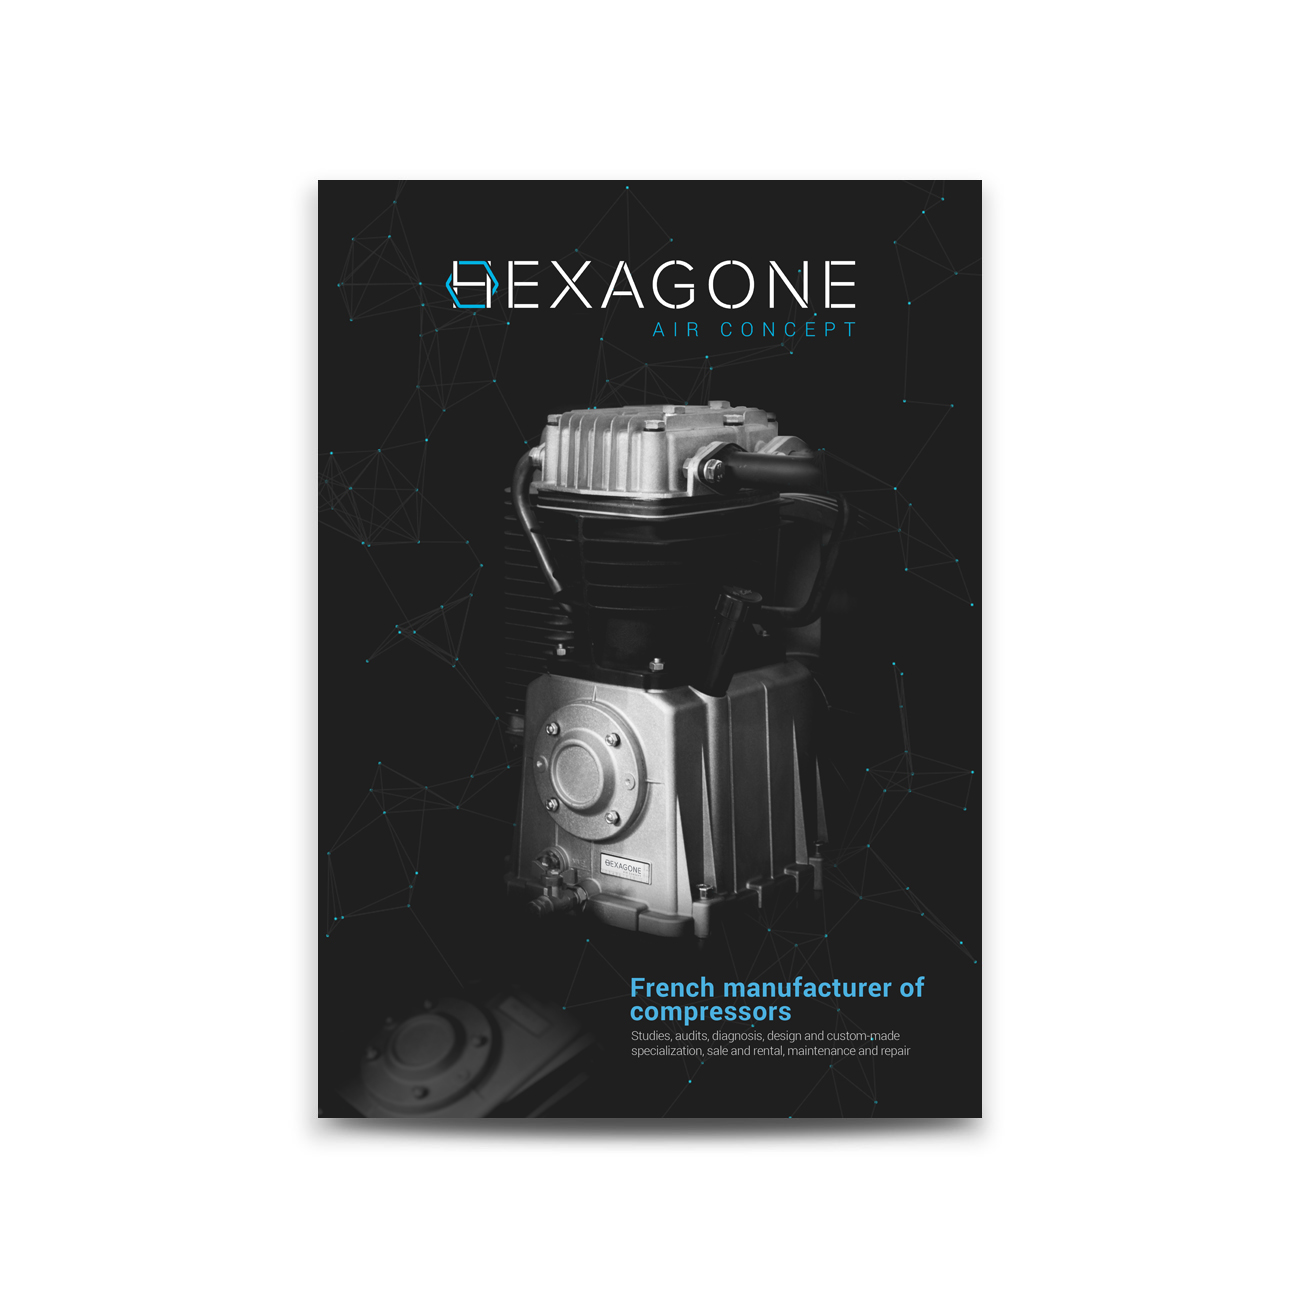 Hexagone Air Concept | Special compressors